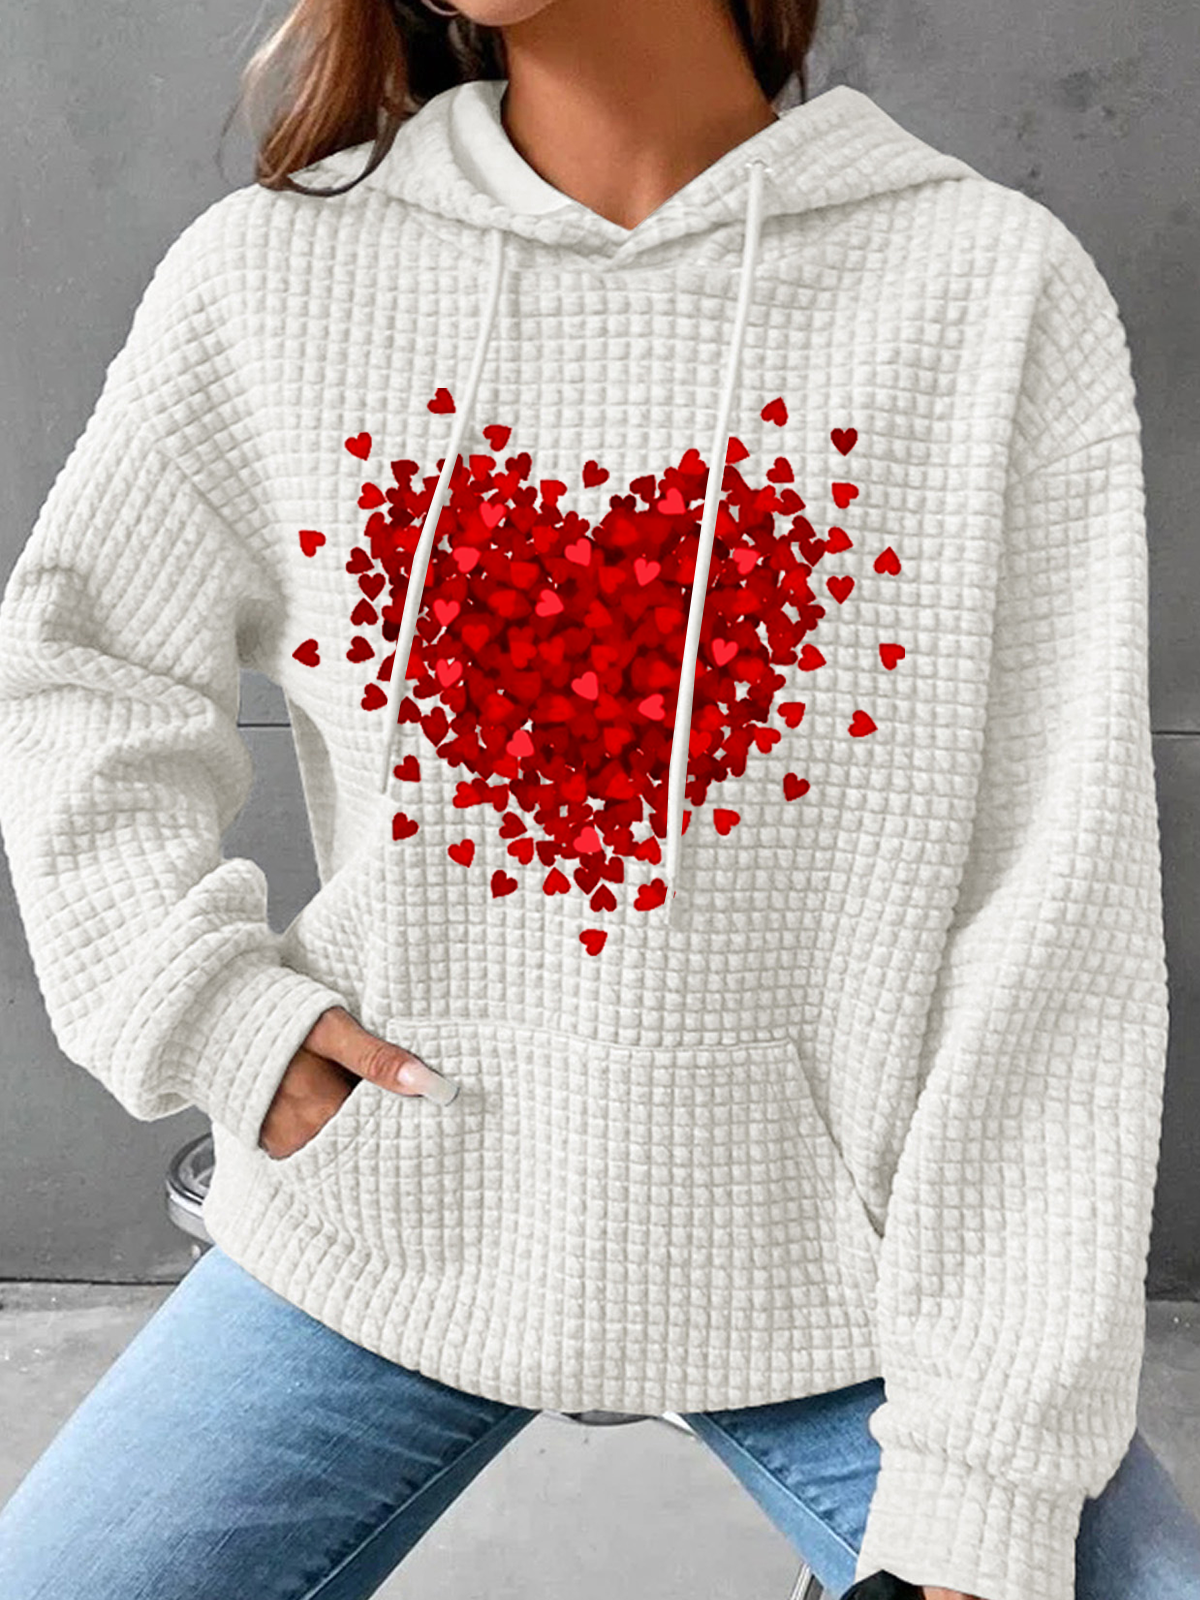 Women's Spring Hoodie Casual Heart Print Sweatshirt Valentine's Day Gifts White Pink Gray Black Blue